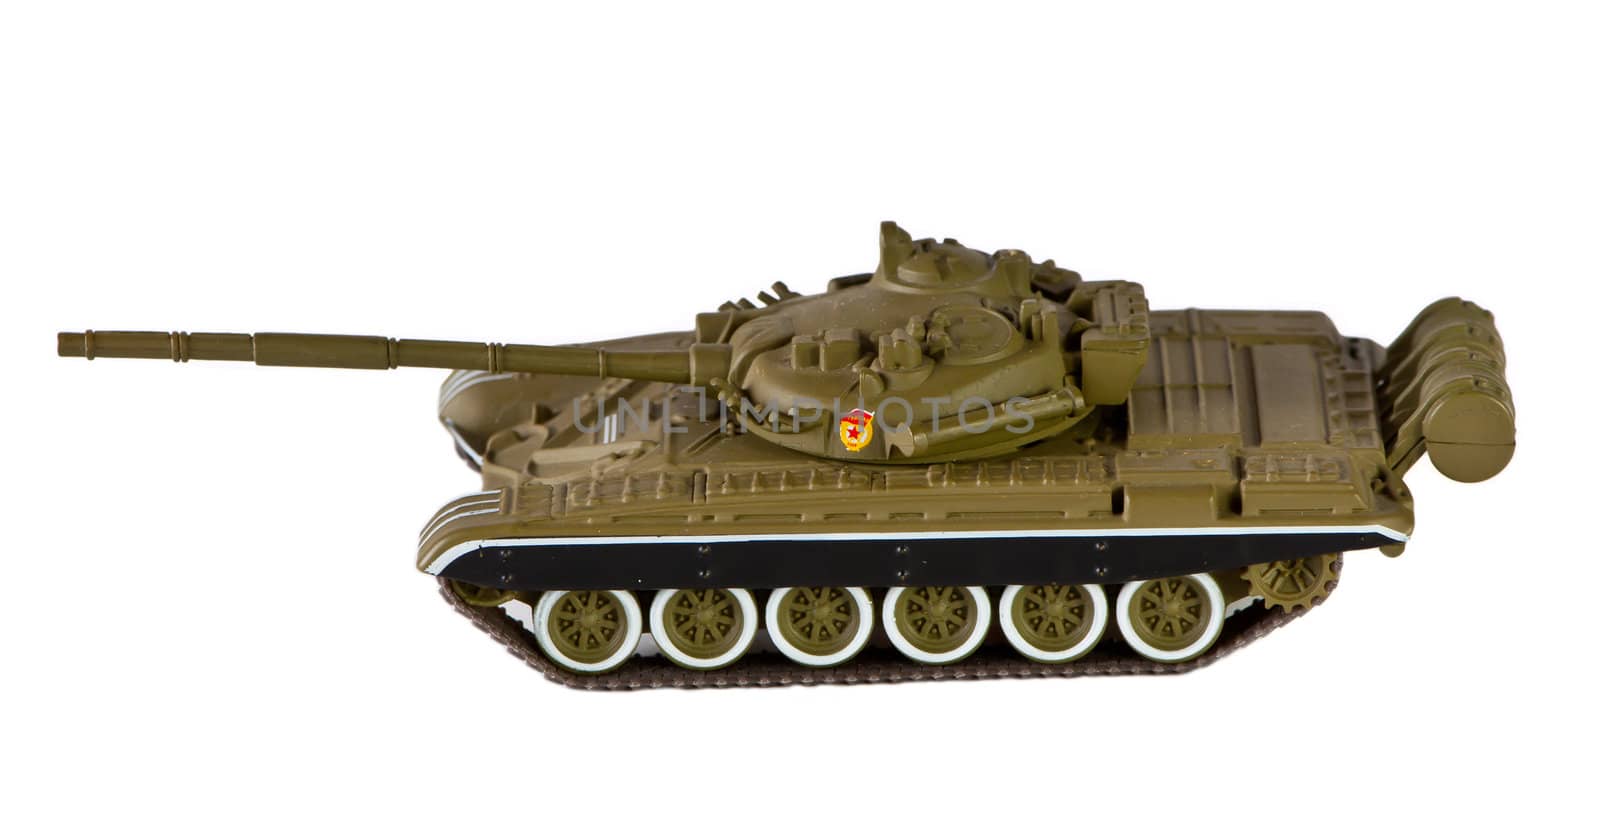 Soviet tank by rook